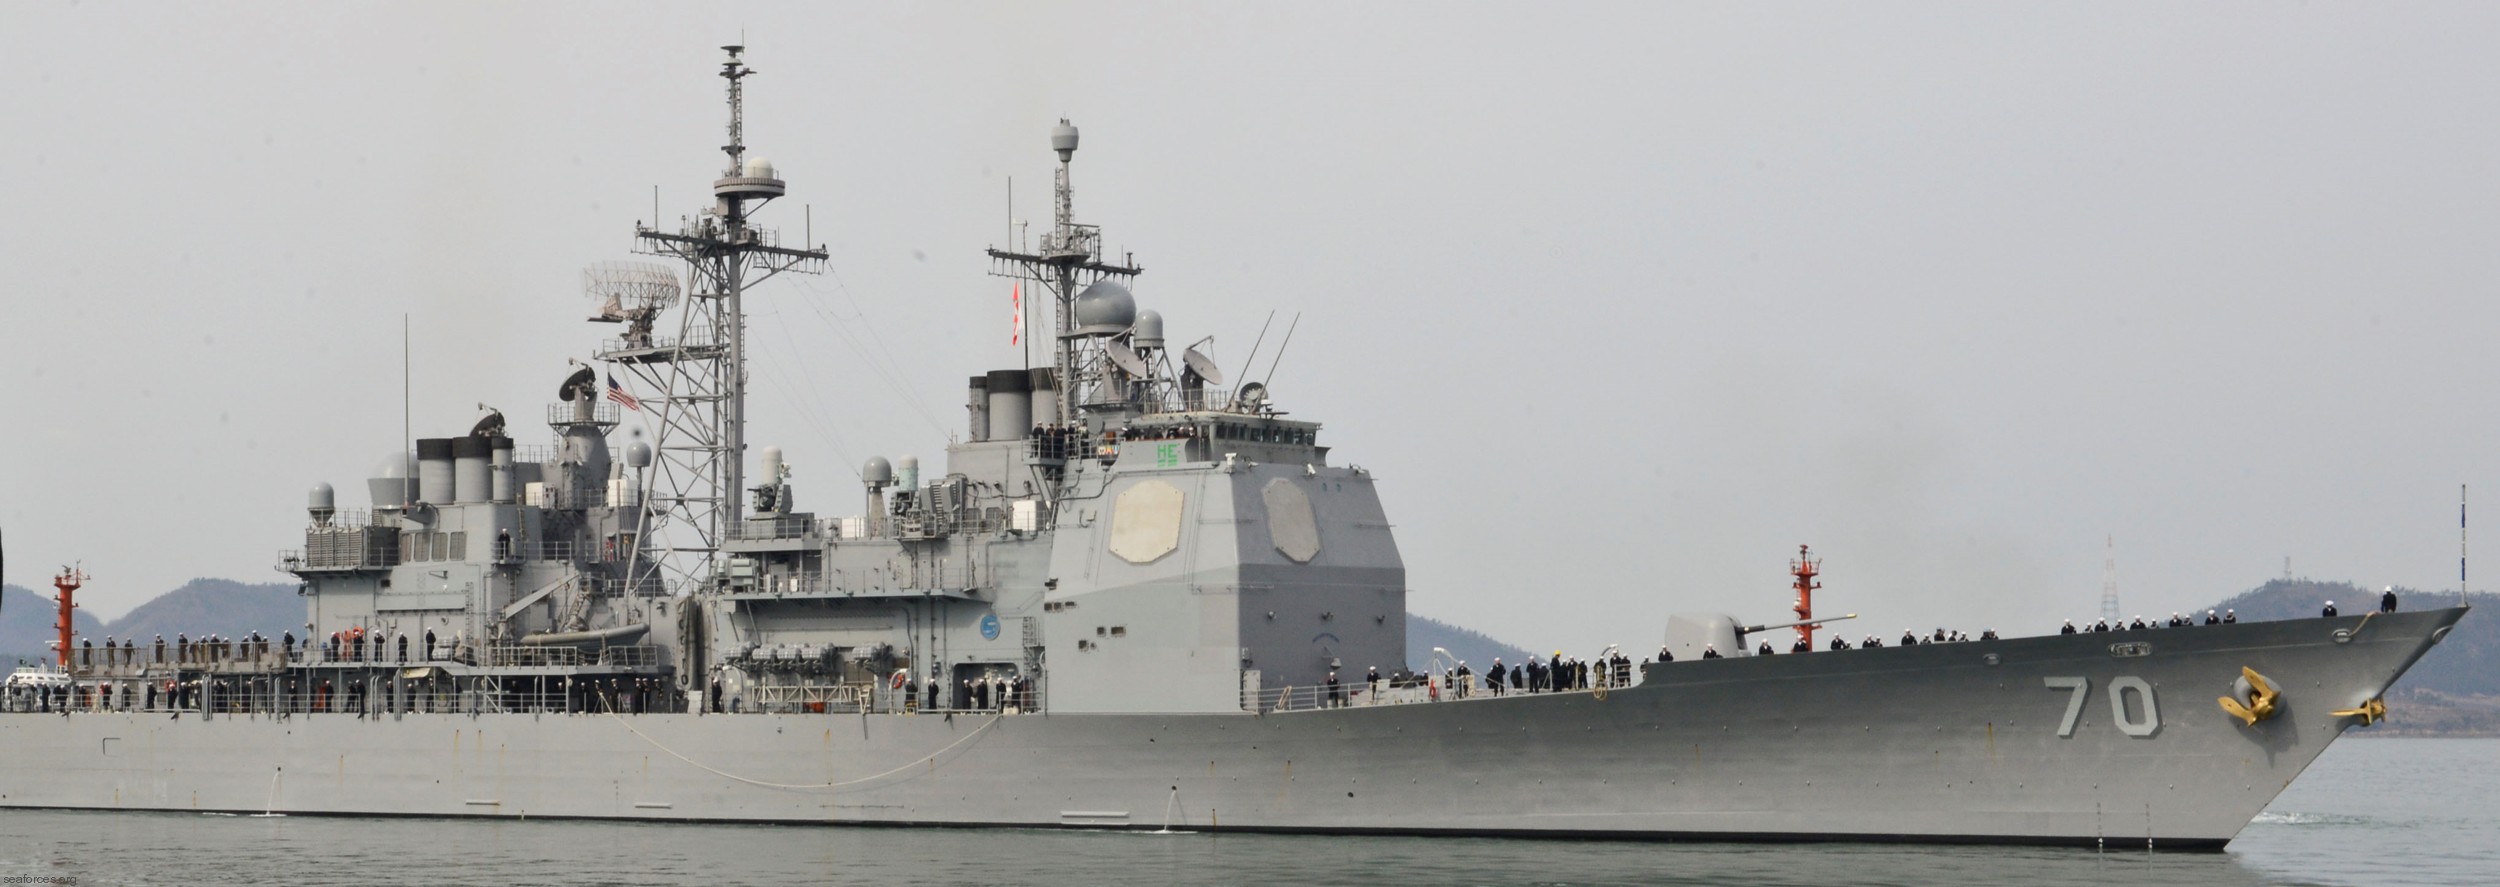 cg-70 uss lake erie ticonderoga class guided missile cruiser navy 10 mokpo korea